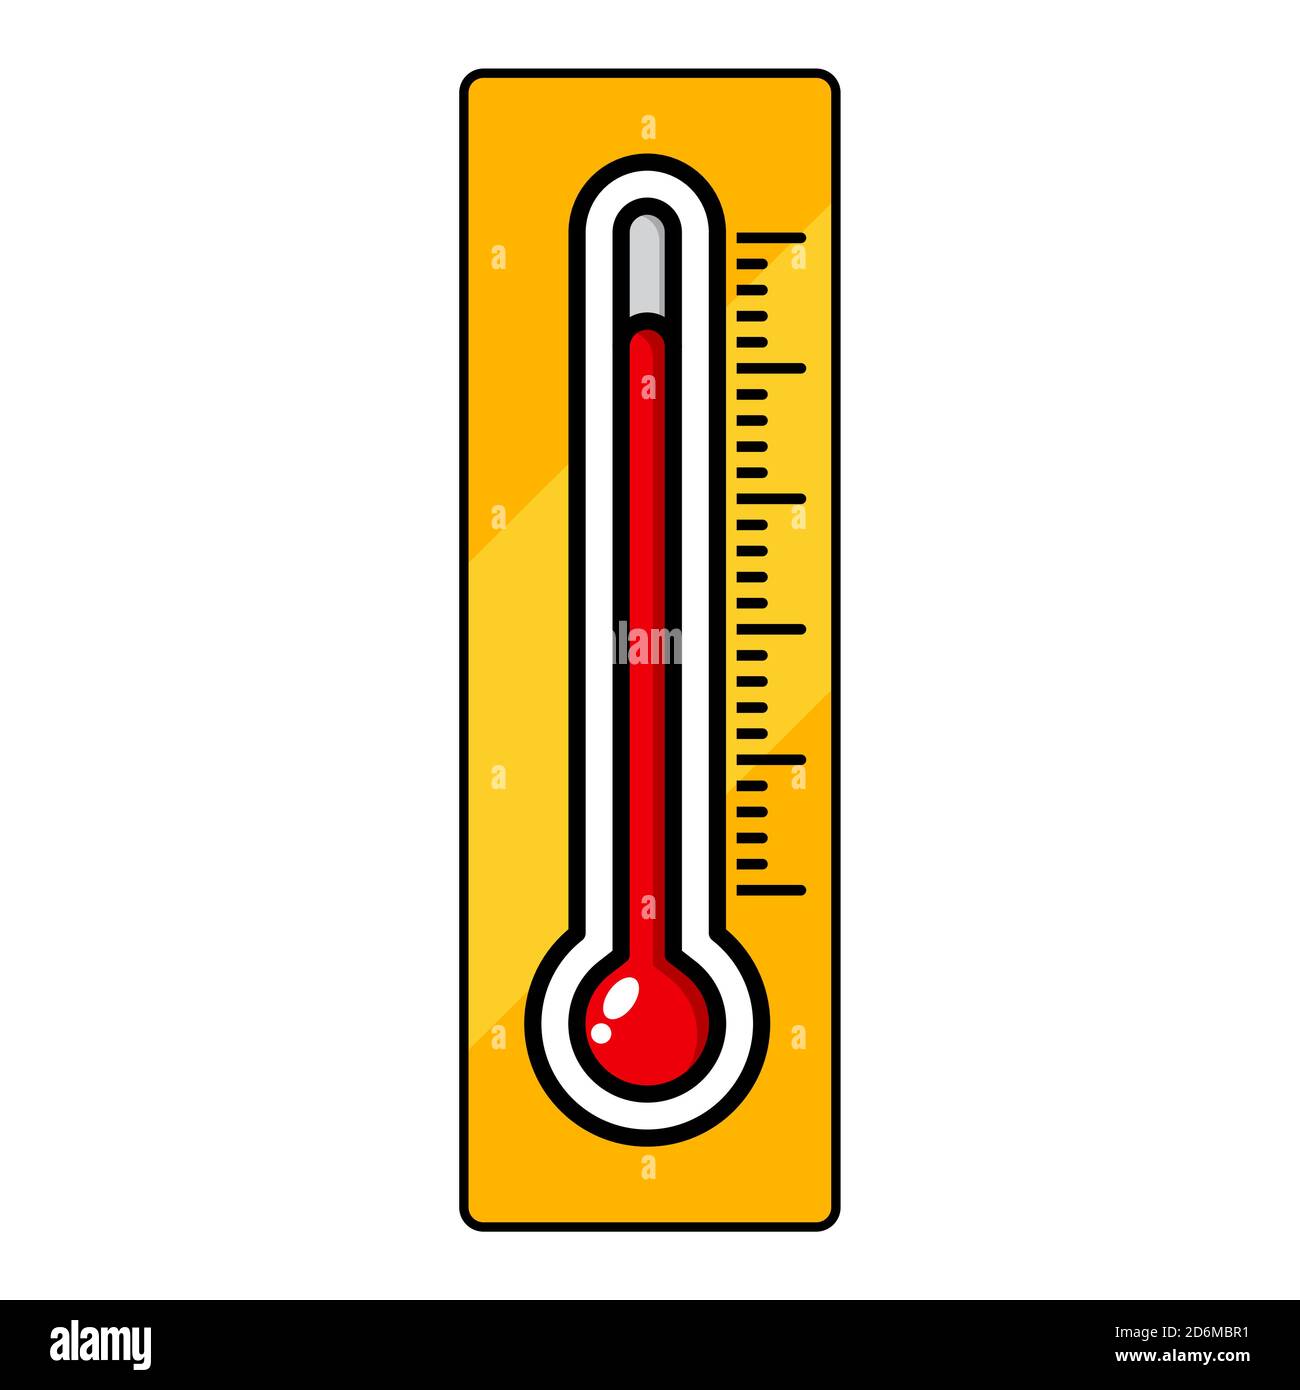 Grill Oberflächen-thermometer, Stock-Vektor